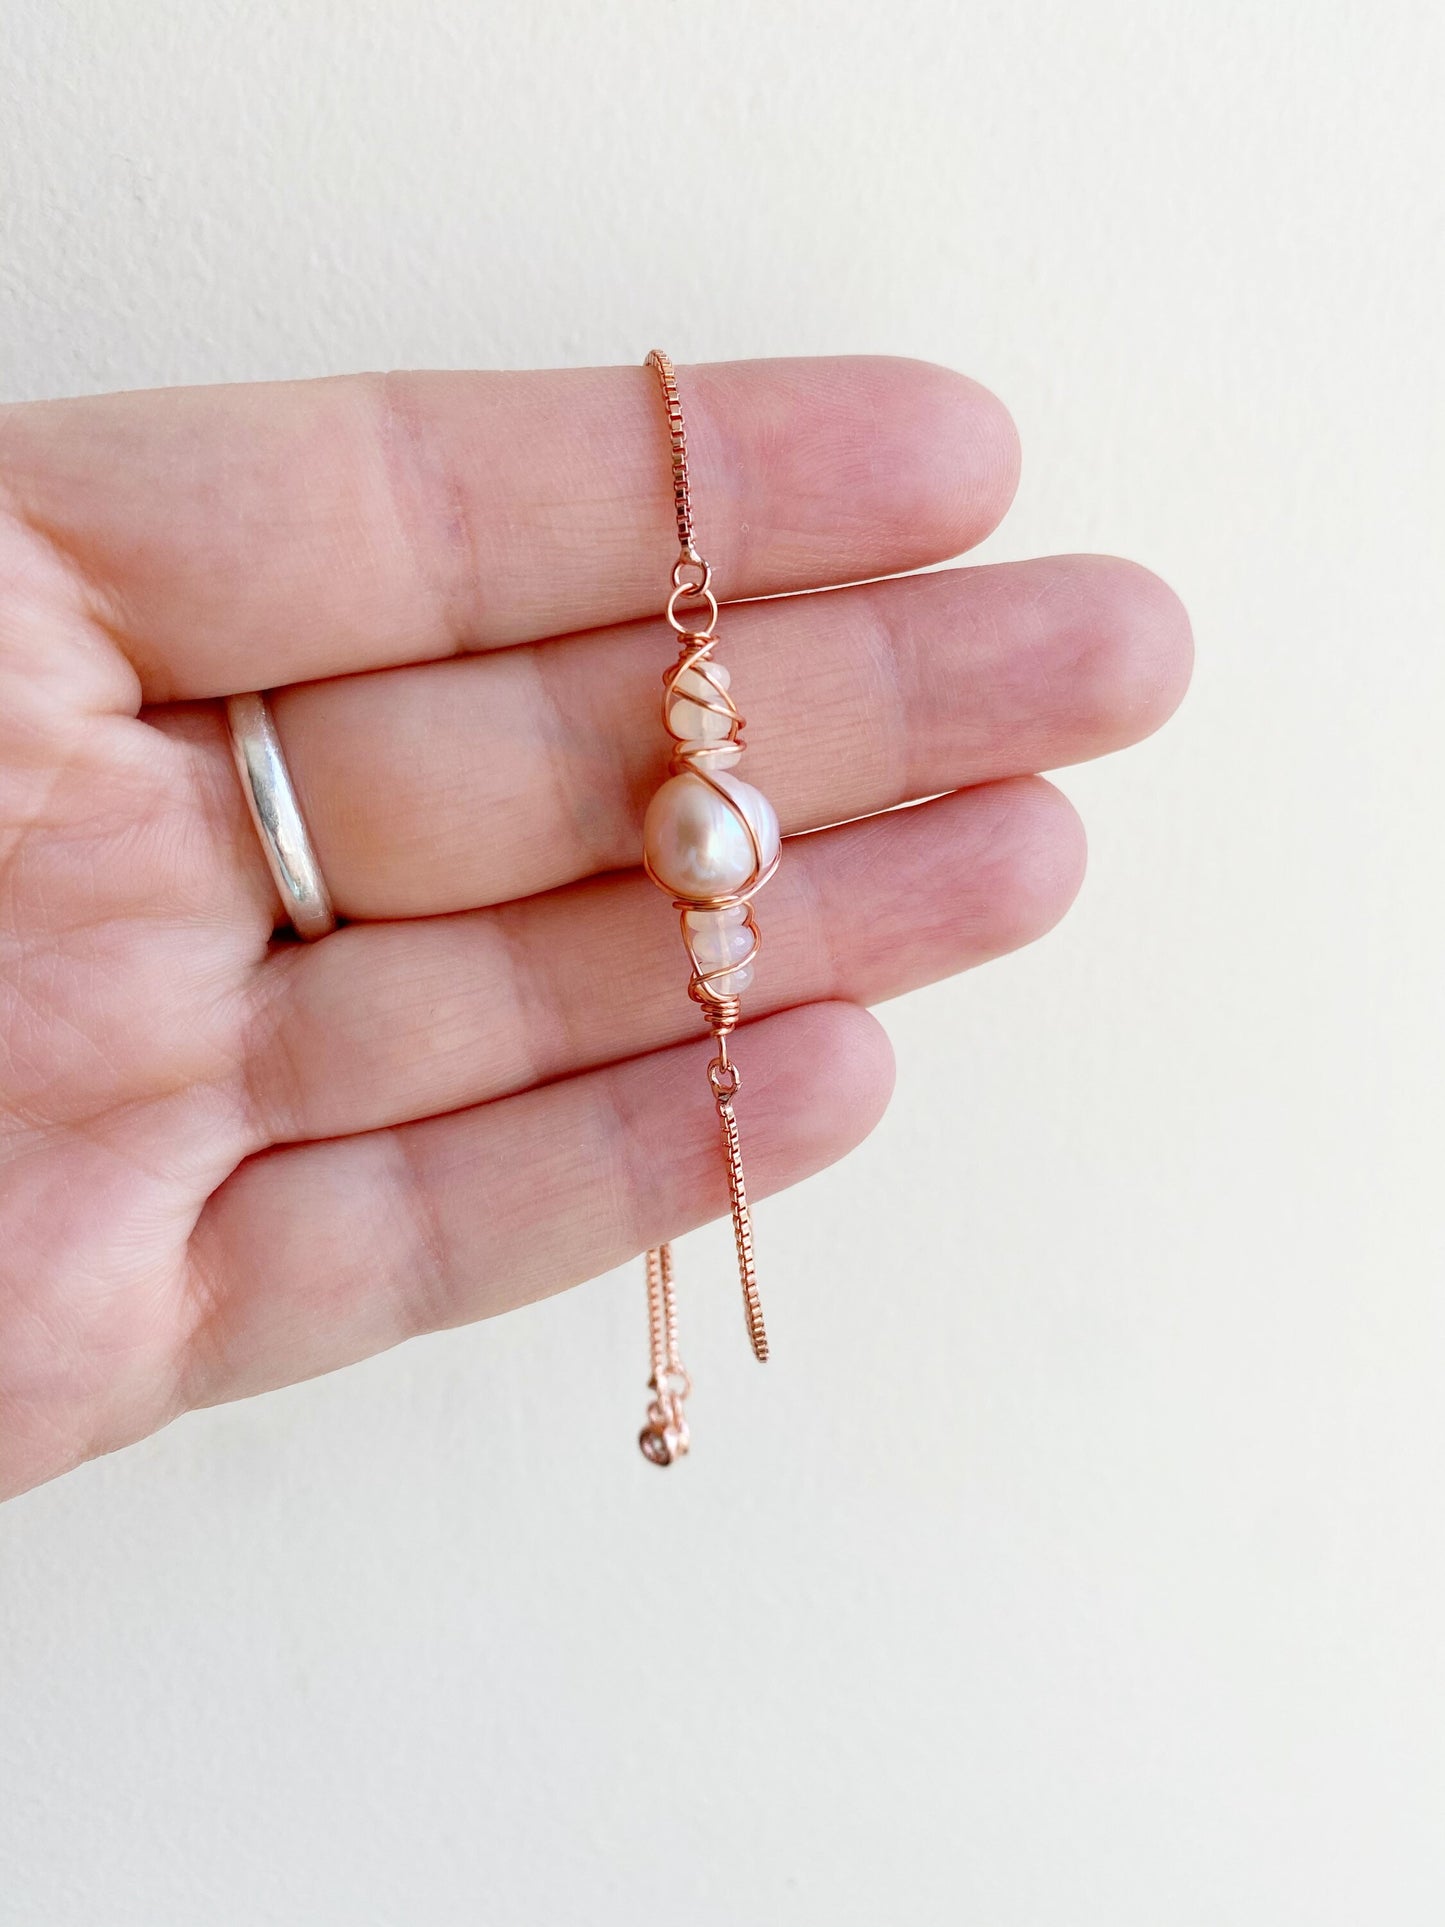 Pink pearl and opal adjustable bracelet